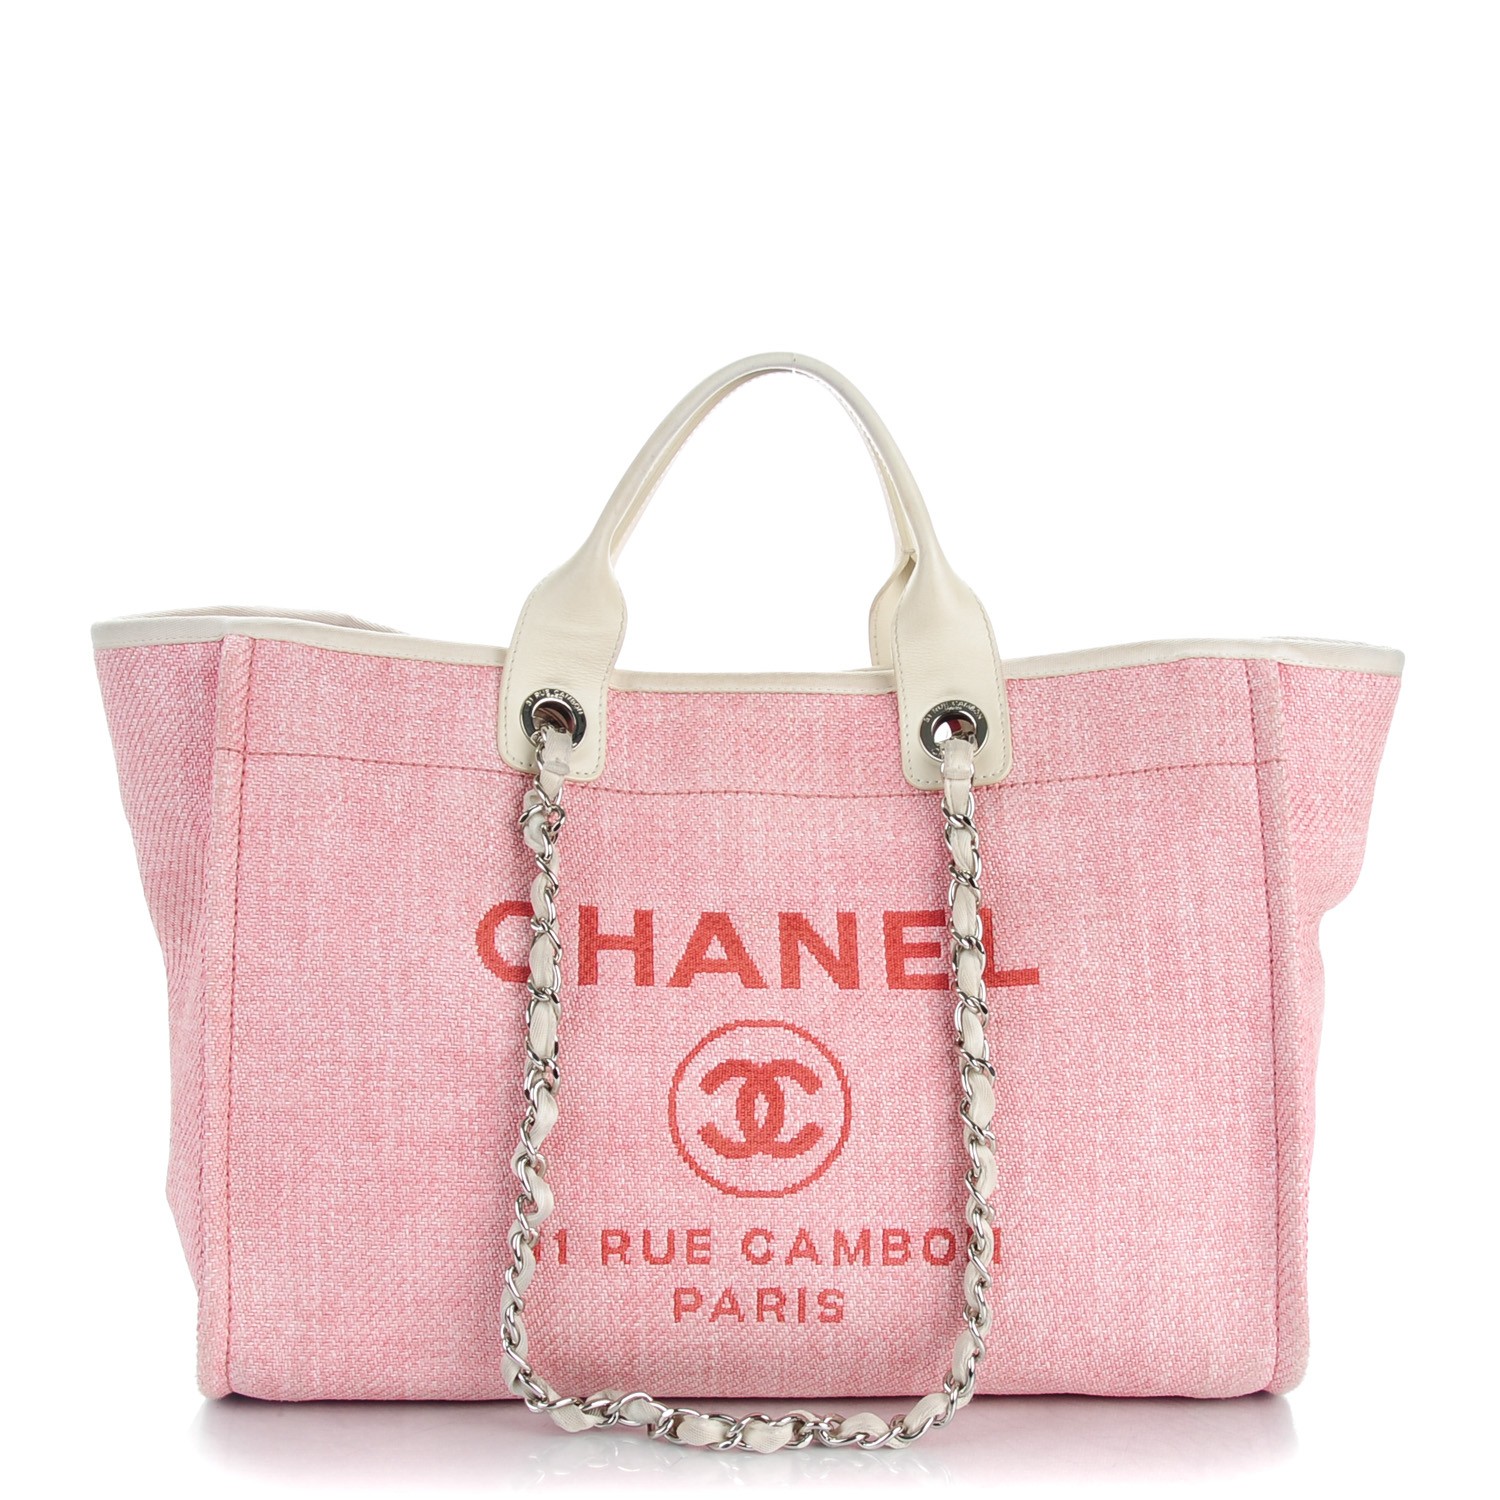 Chanel Canvas Tote Handbags | semashow.com